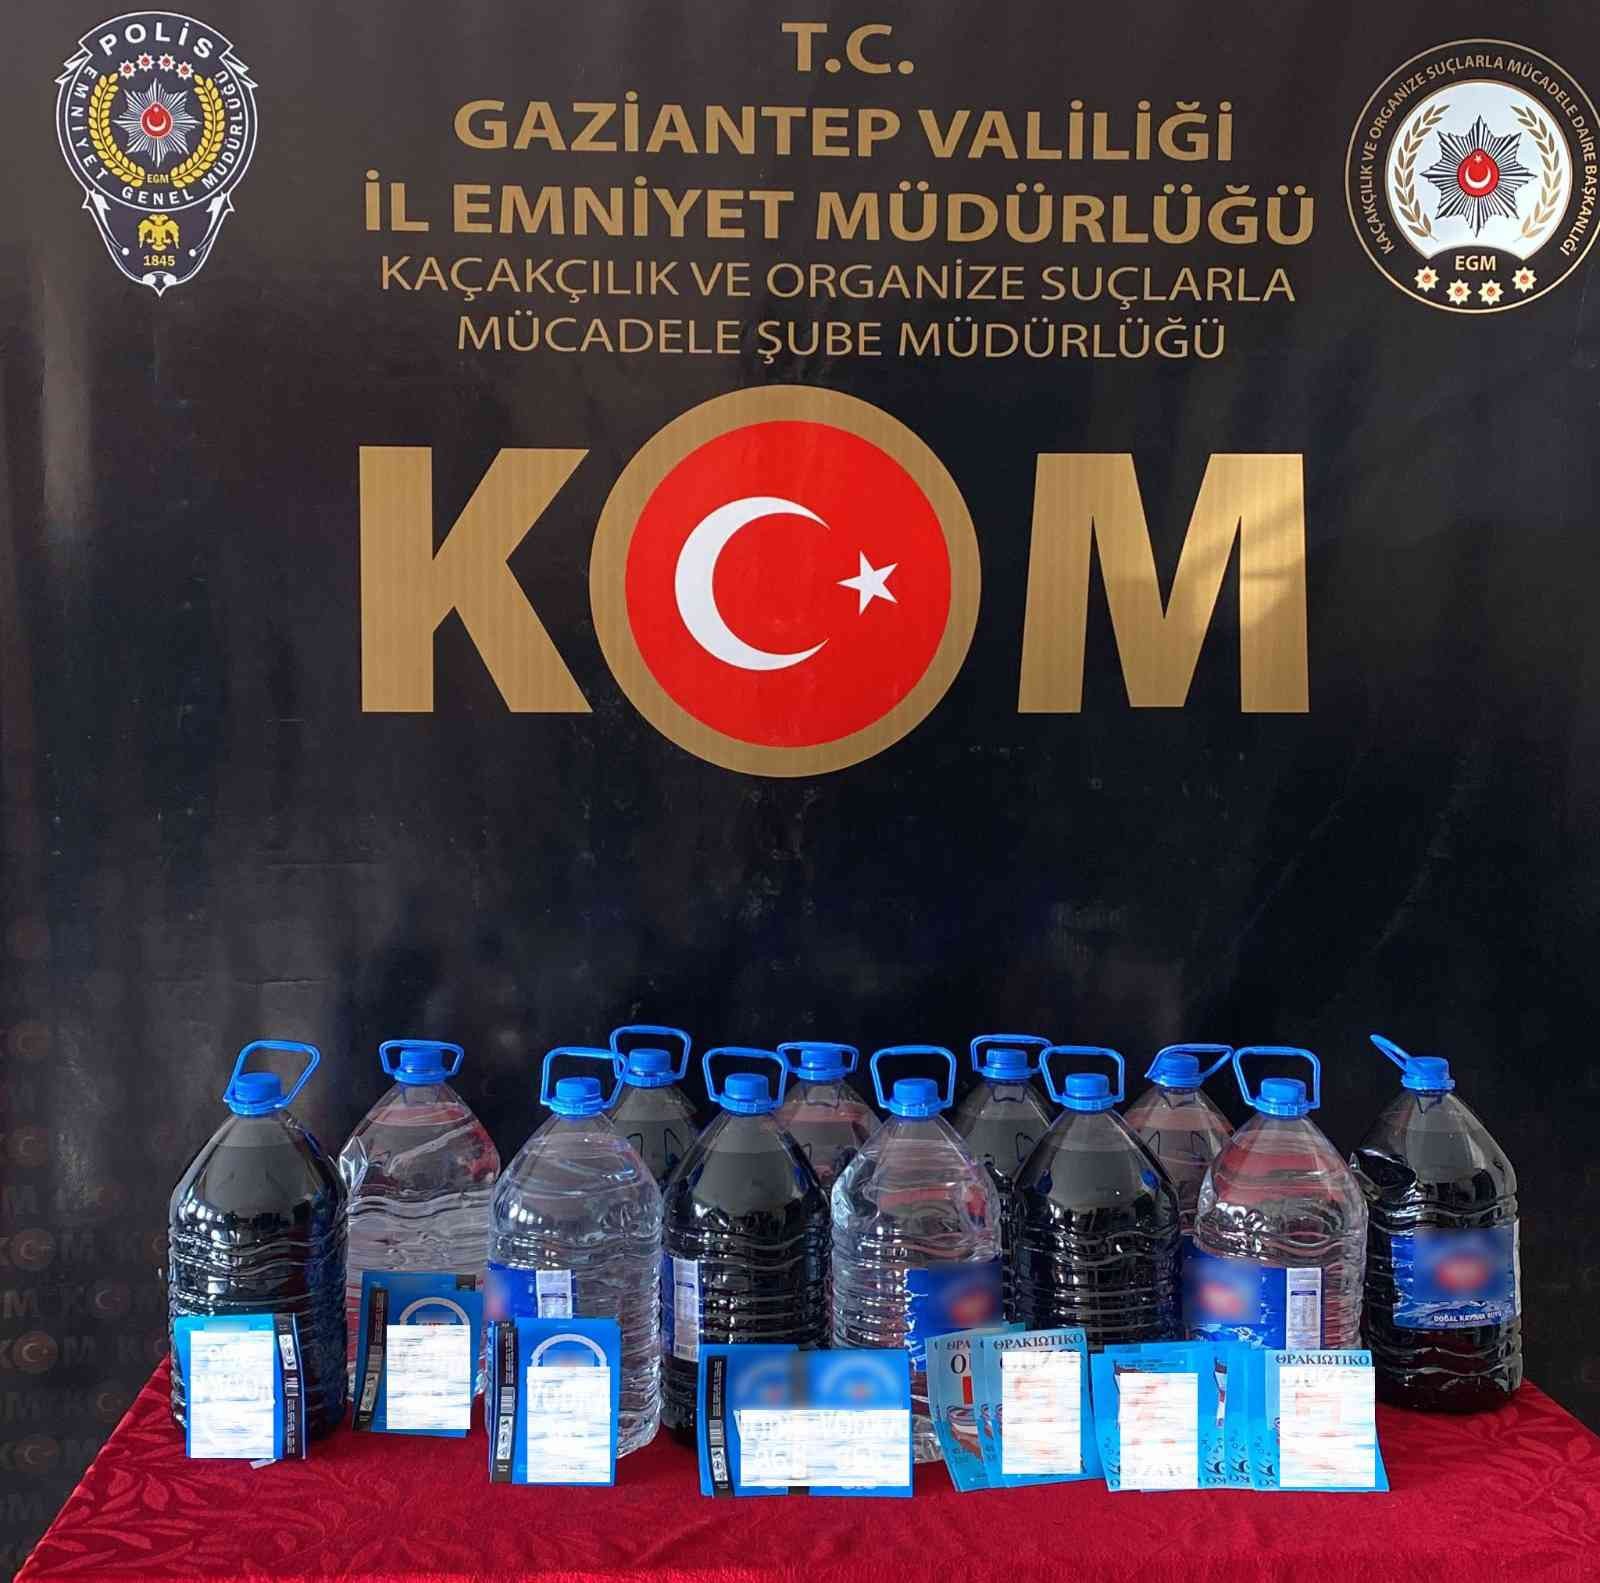 Gaziantep’te kaçak içki operasyonu #gaziantep